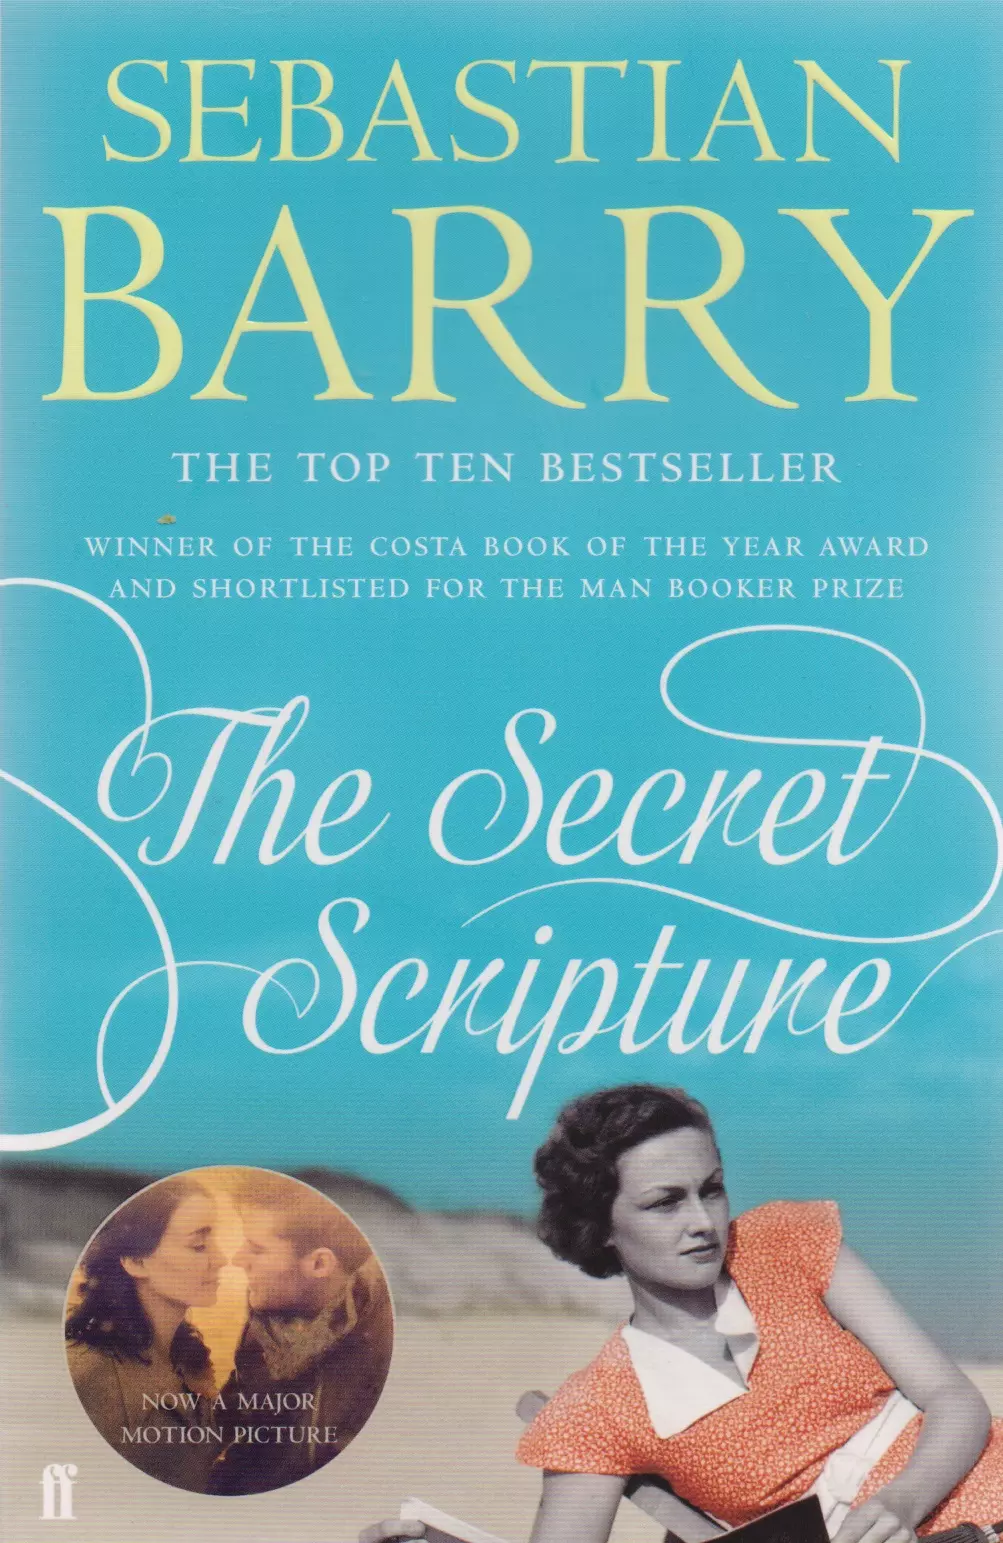 barry sebastian annie dunne Barry Sebastian The Secret Scripture (м) Barry